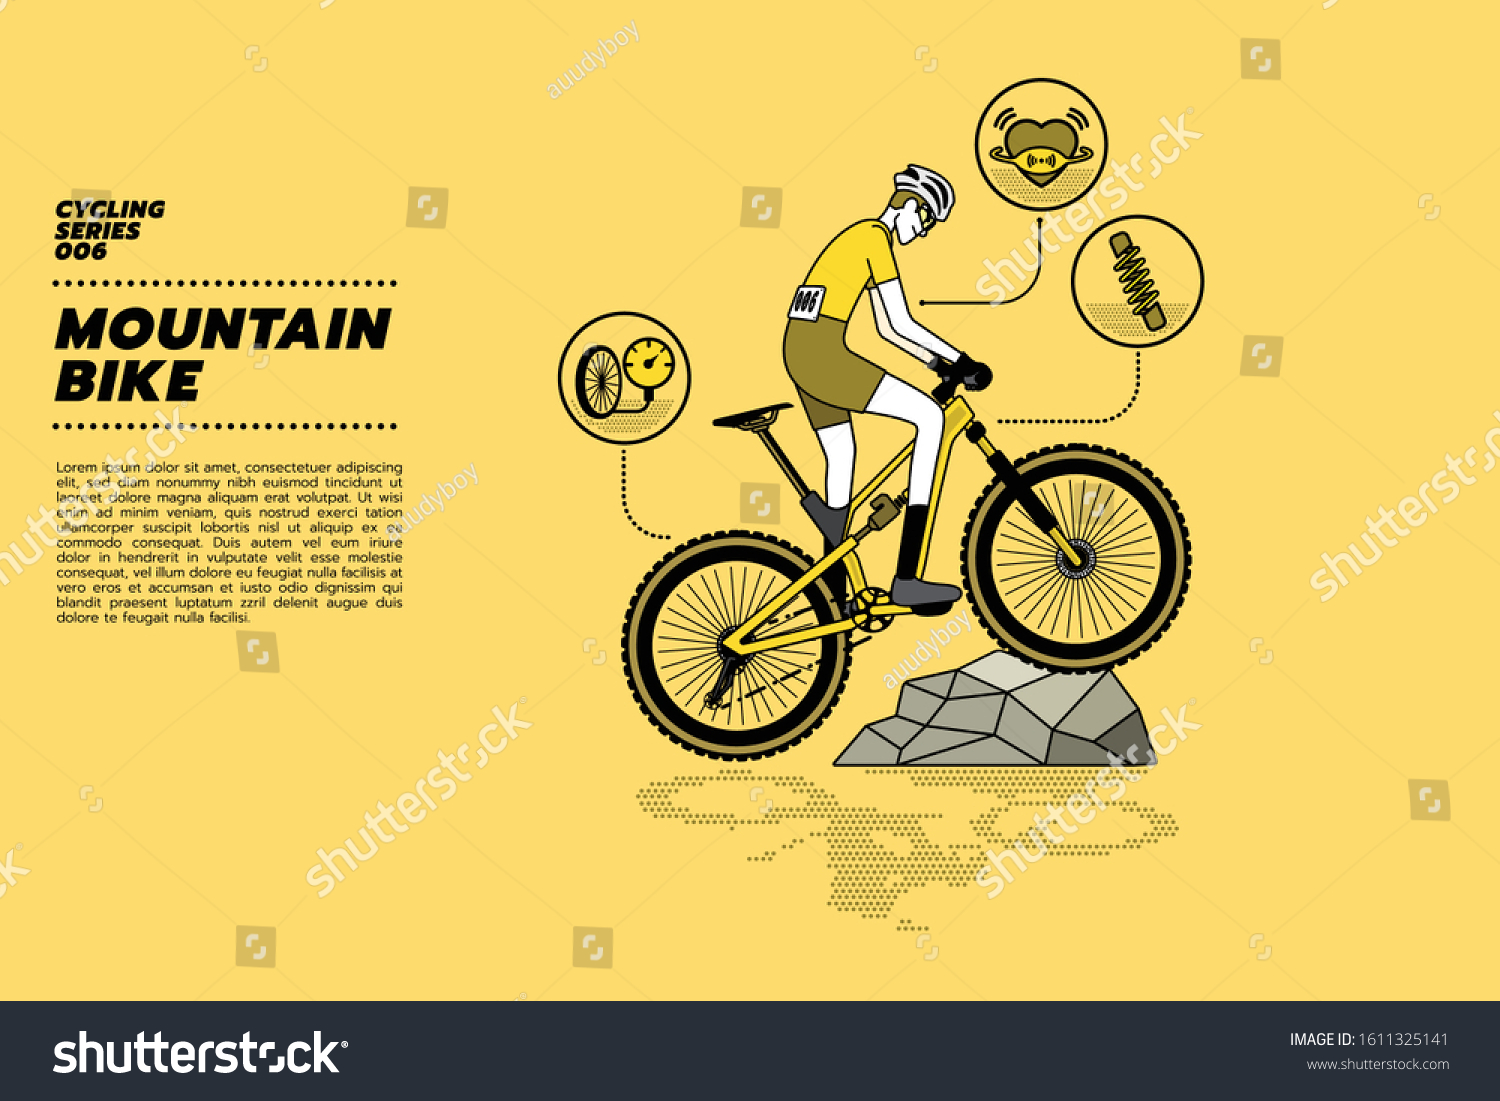 climbing on a full suspension mountain bike